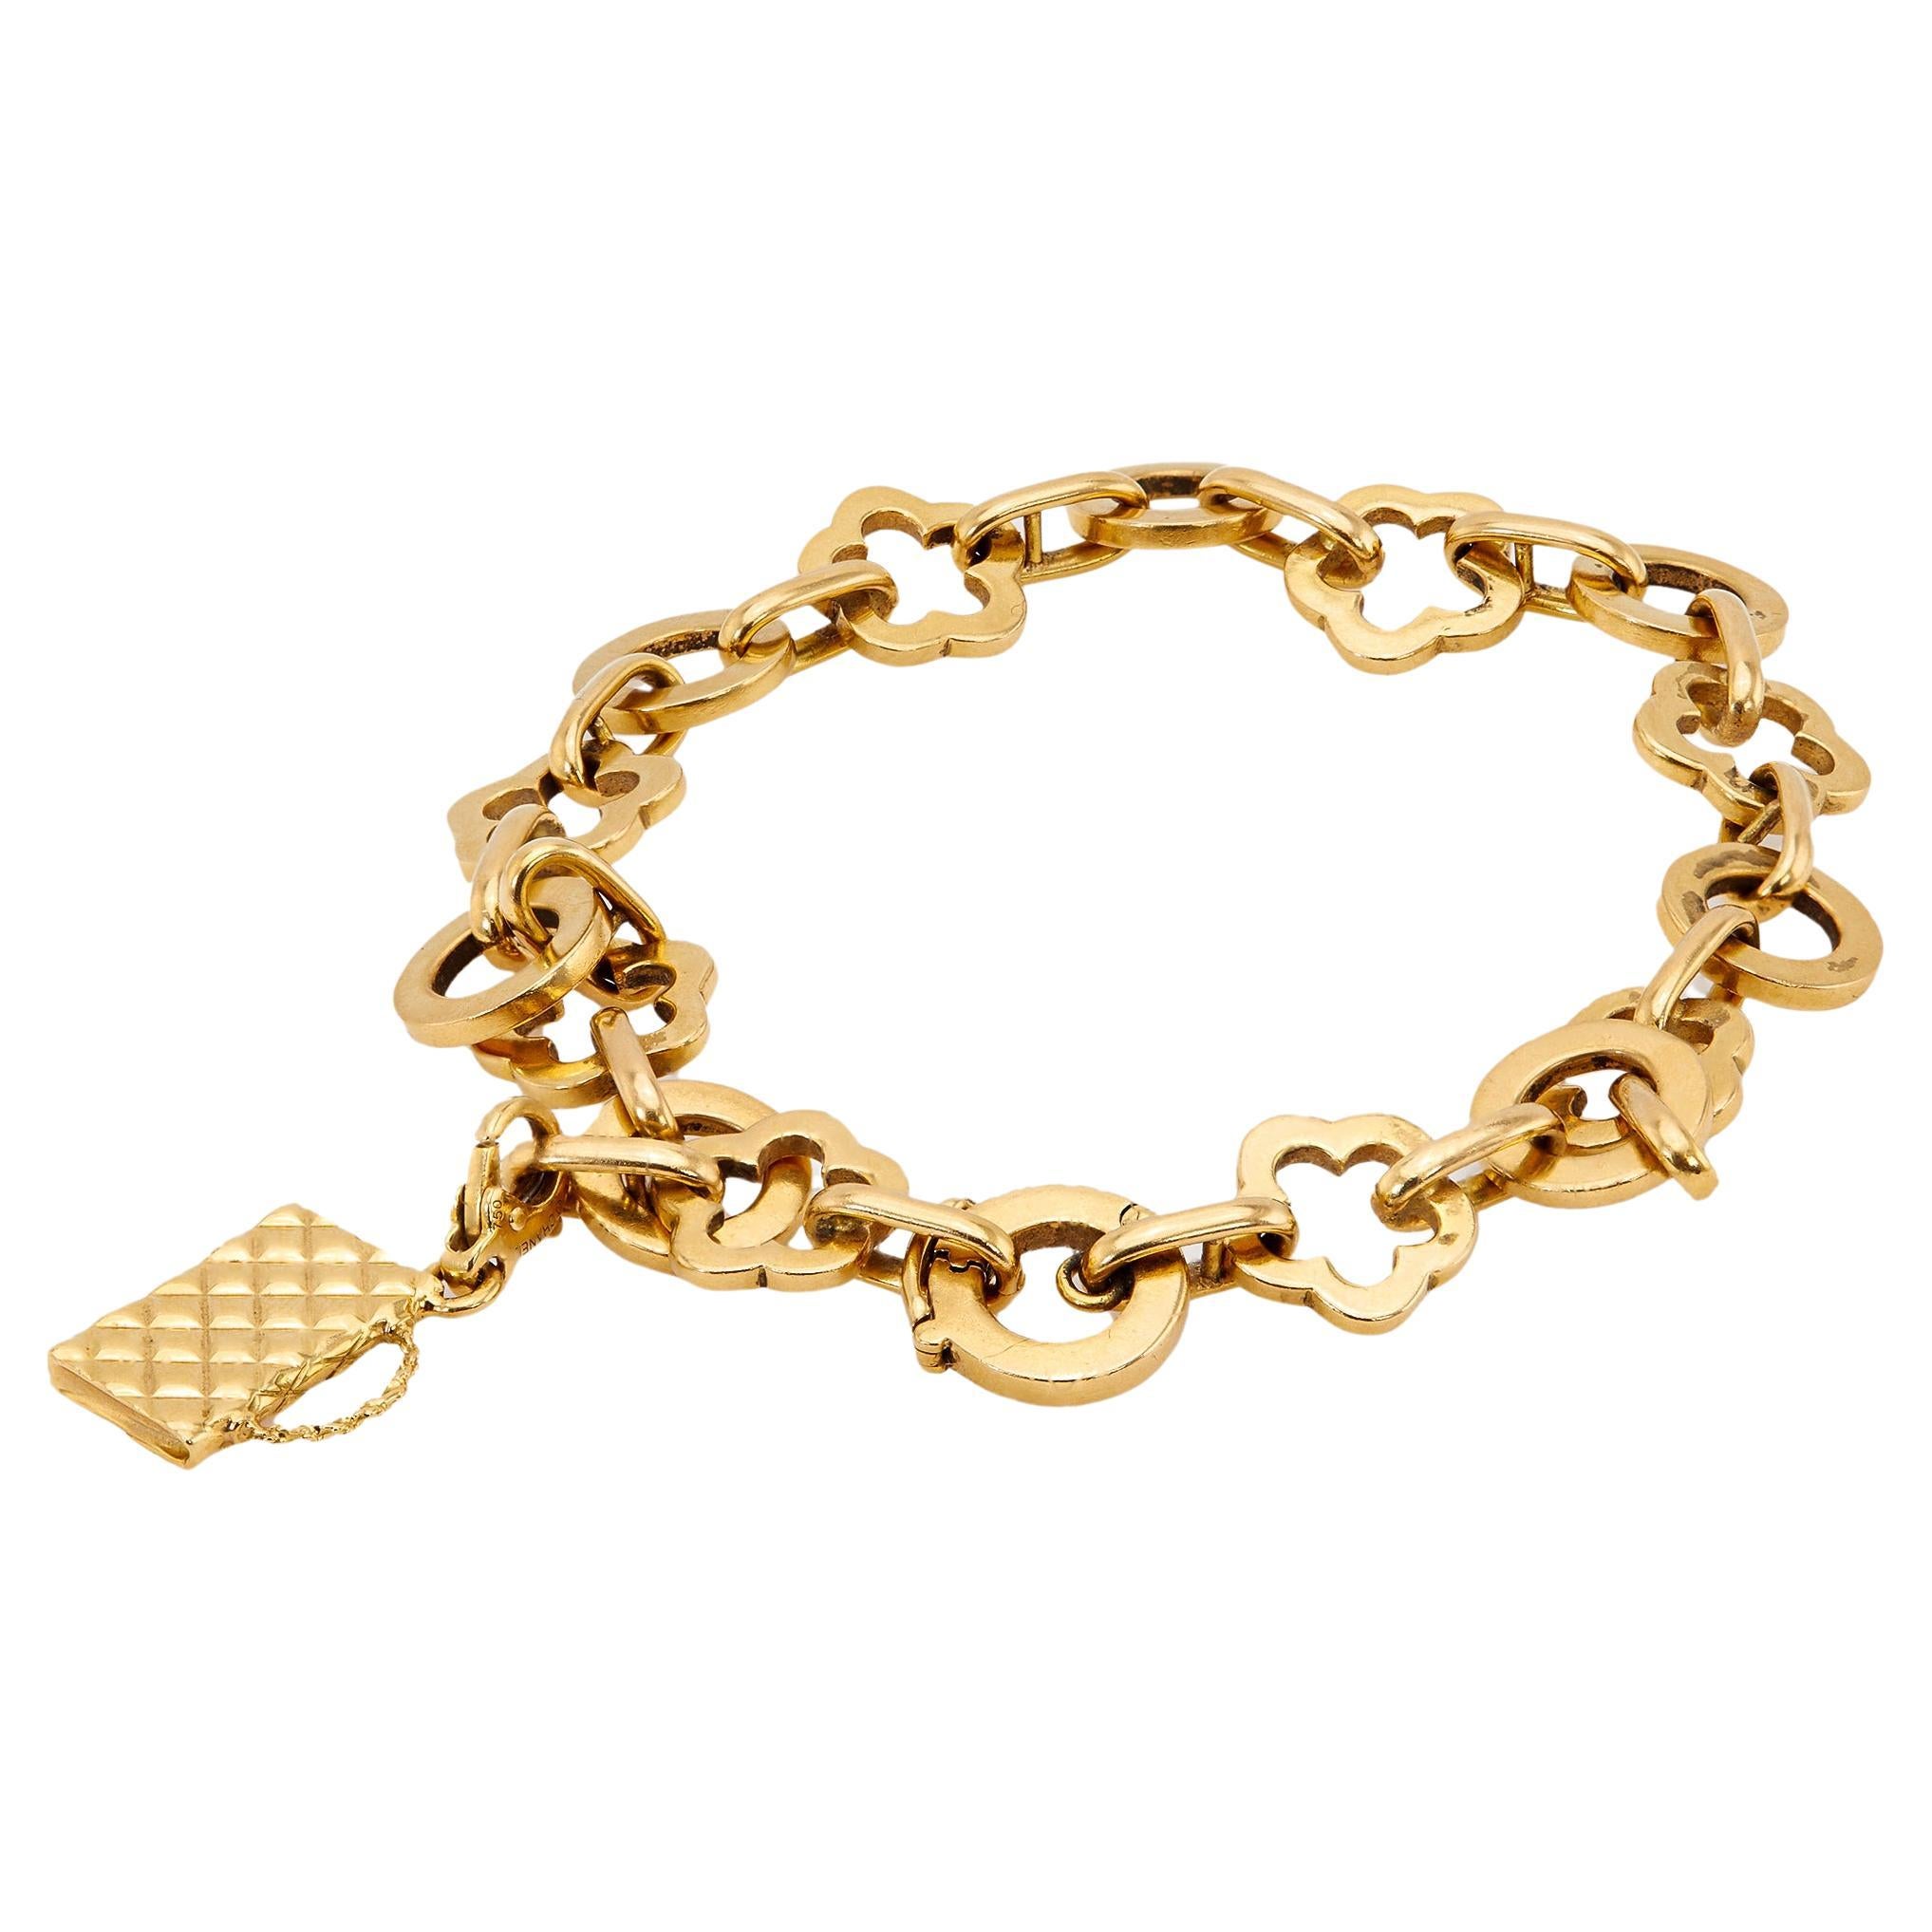 Vintage Chanel Flower Link 18k Yellow Gold “Profil de Camelia” Bracelet and Purs